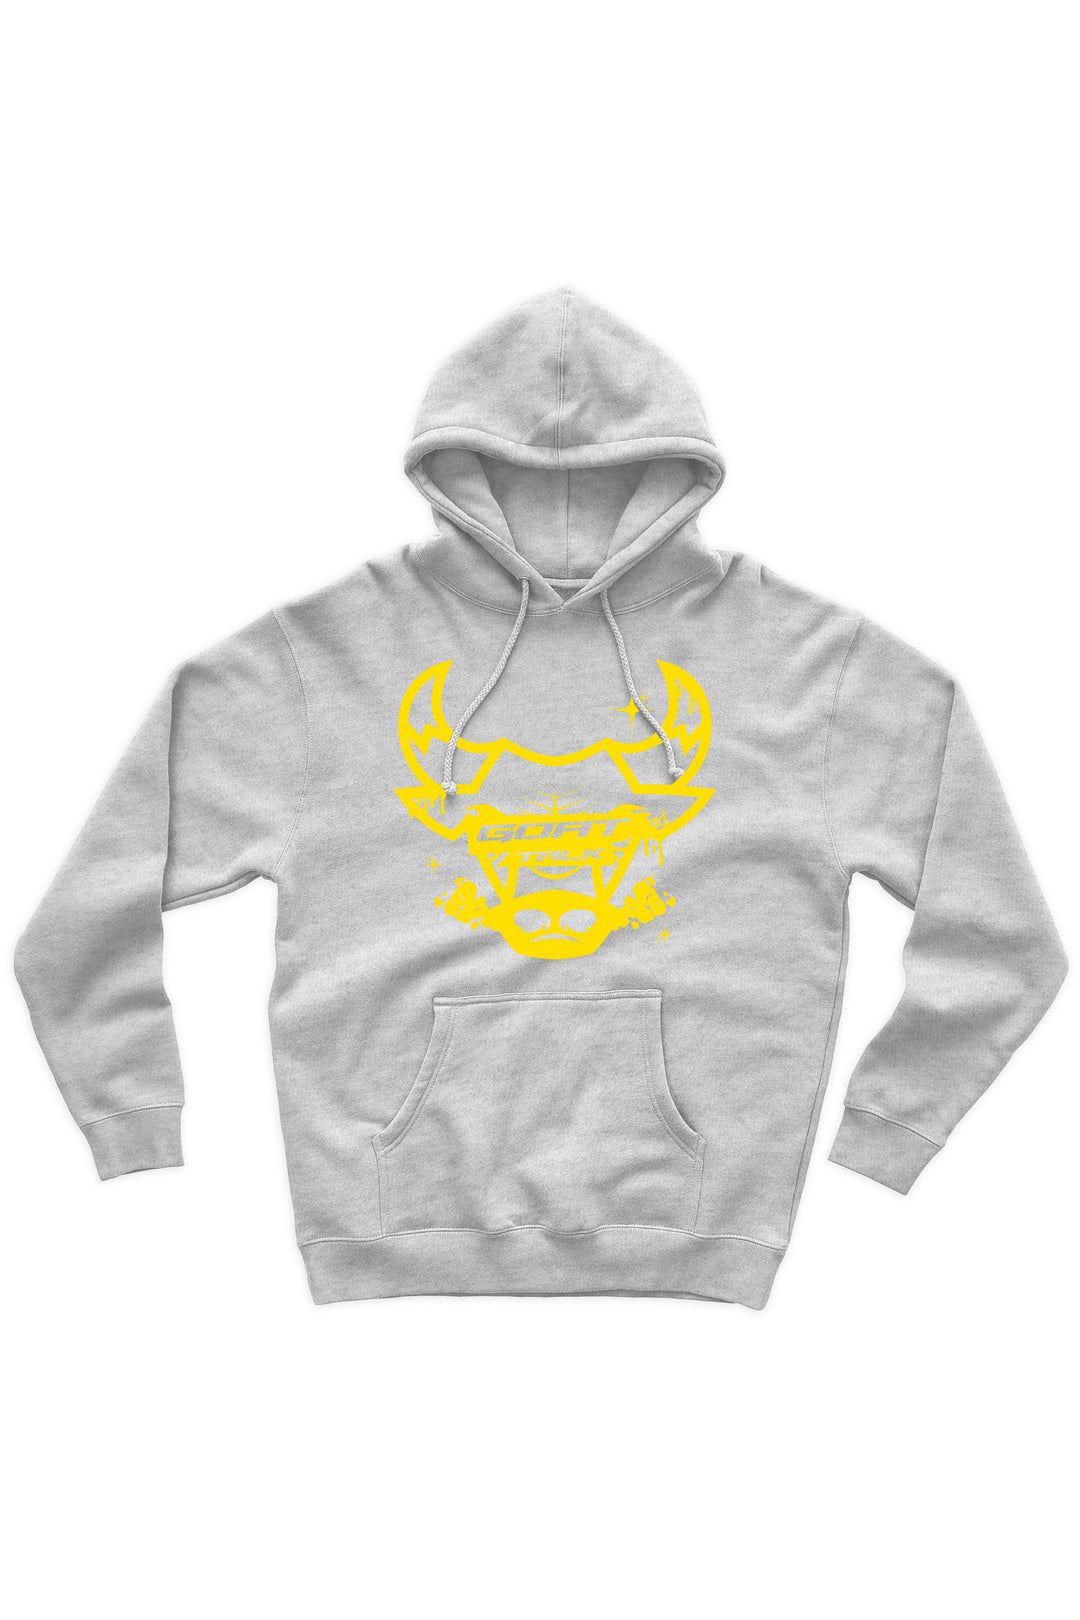 Goat Talk Hoodie (Yellow Logo) - Zamage